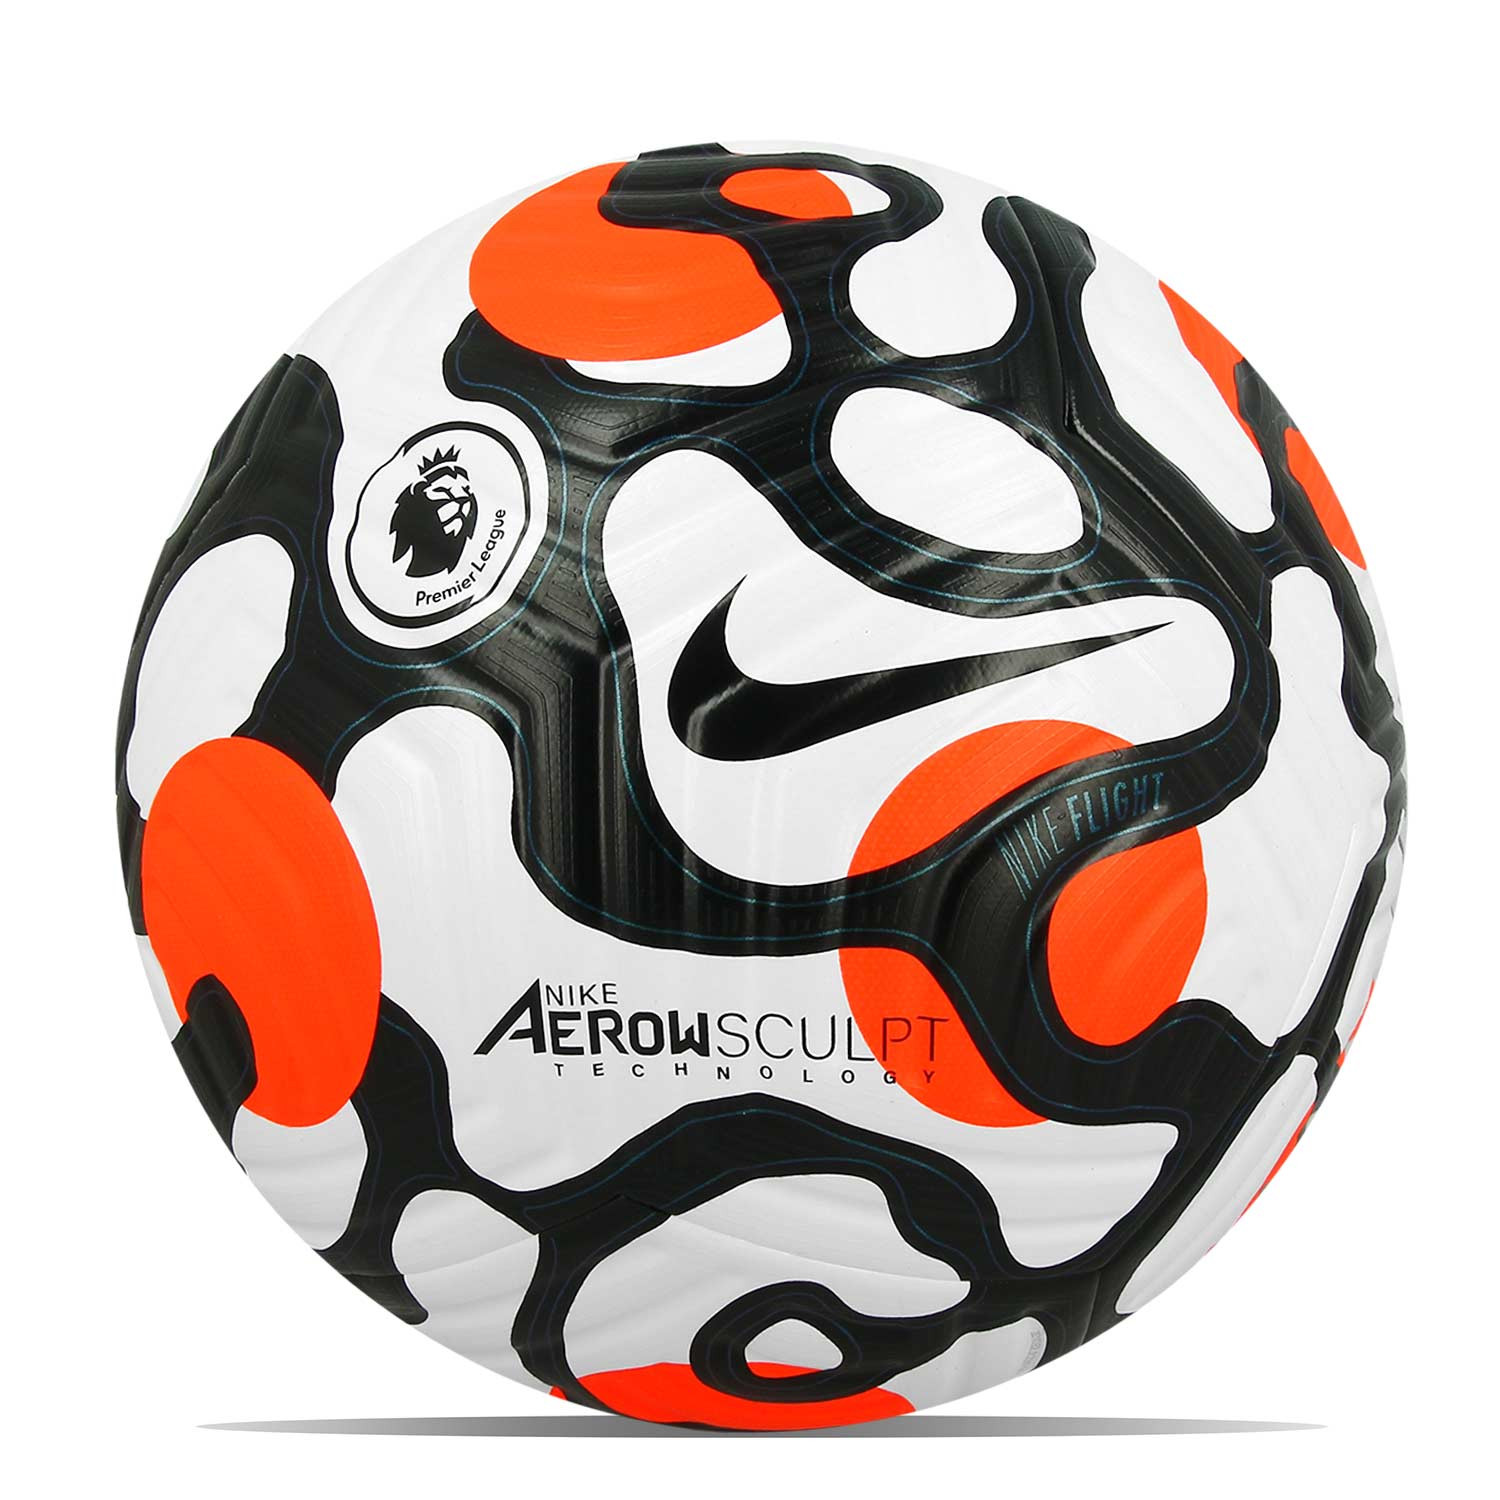 Querido suspender Complaciente Balón Nike Premier League 21 2022 Flight FIFA talla 5 | futbolmania